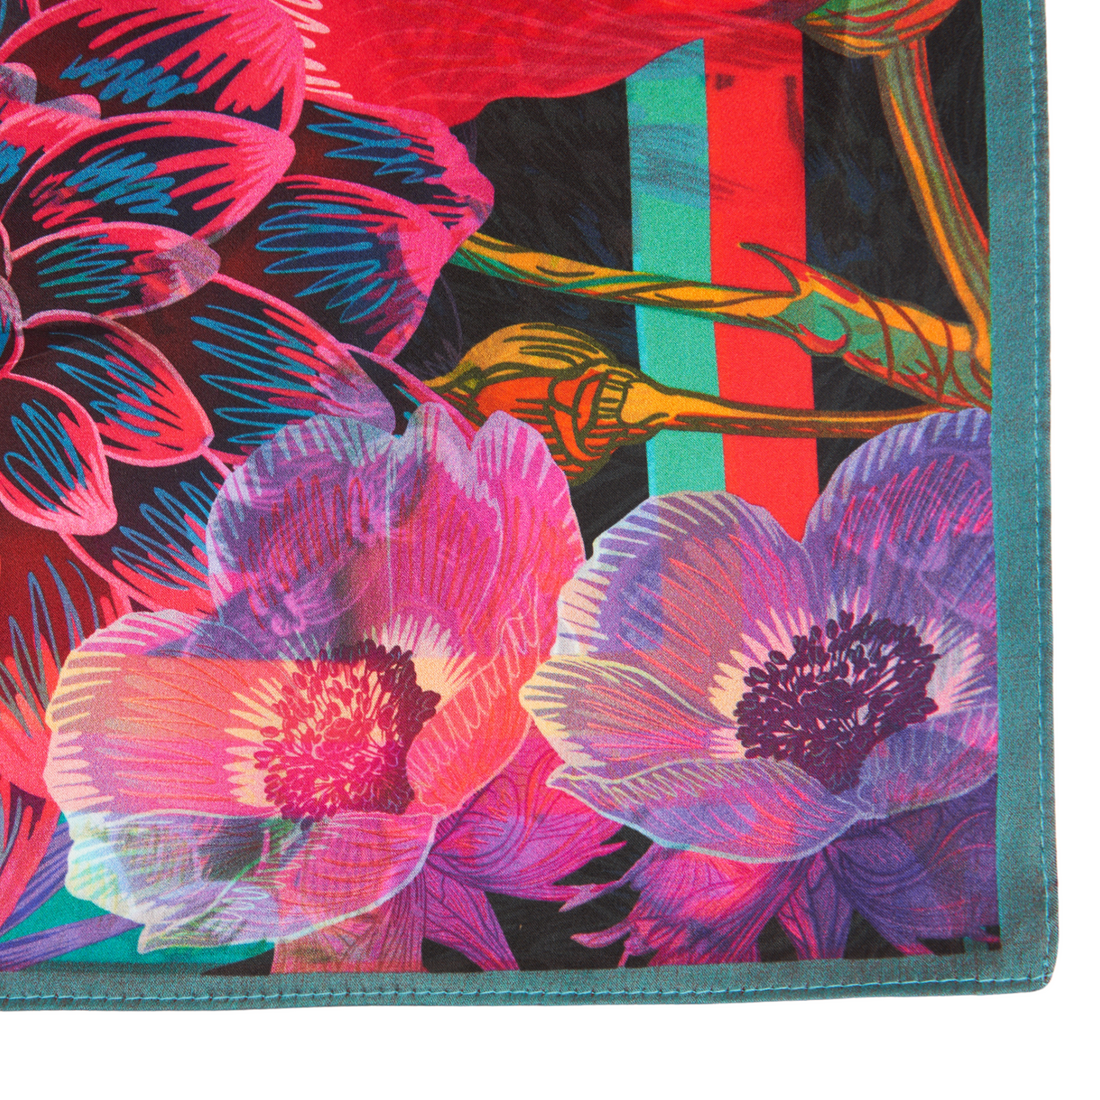 Daisy | 28" Double-Sided Furoshiki Gift Wrap by Adam Klassen